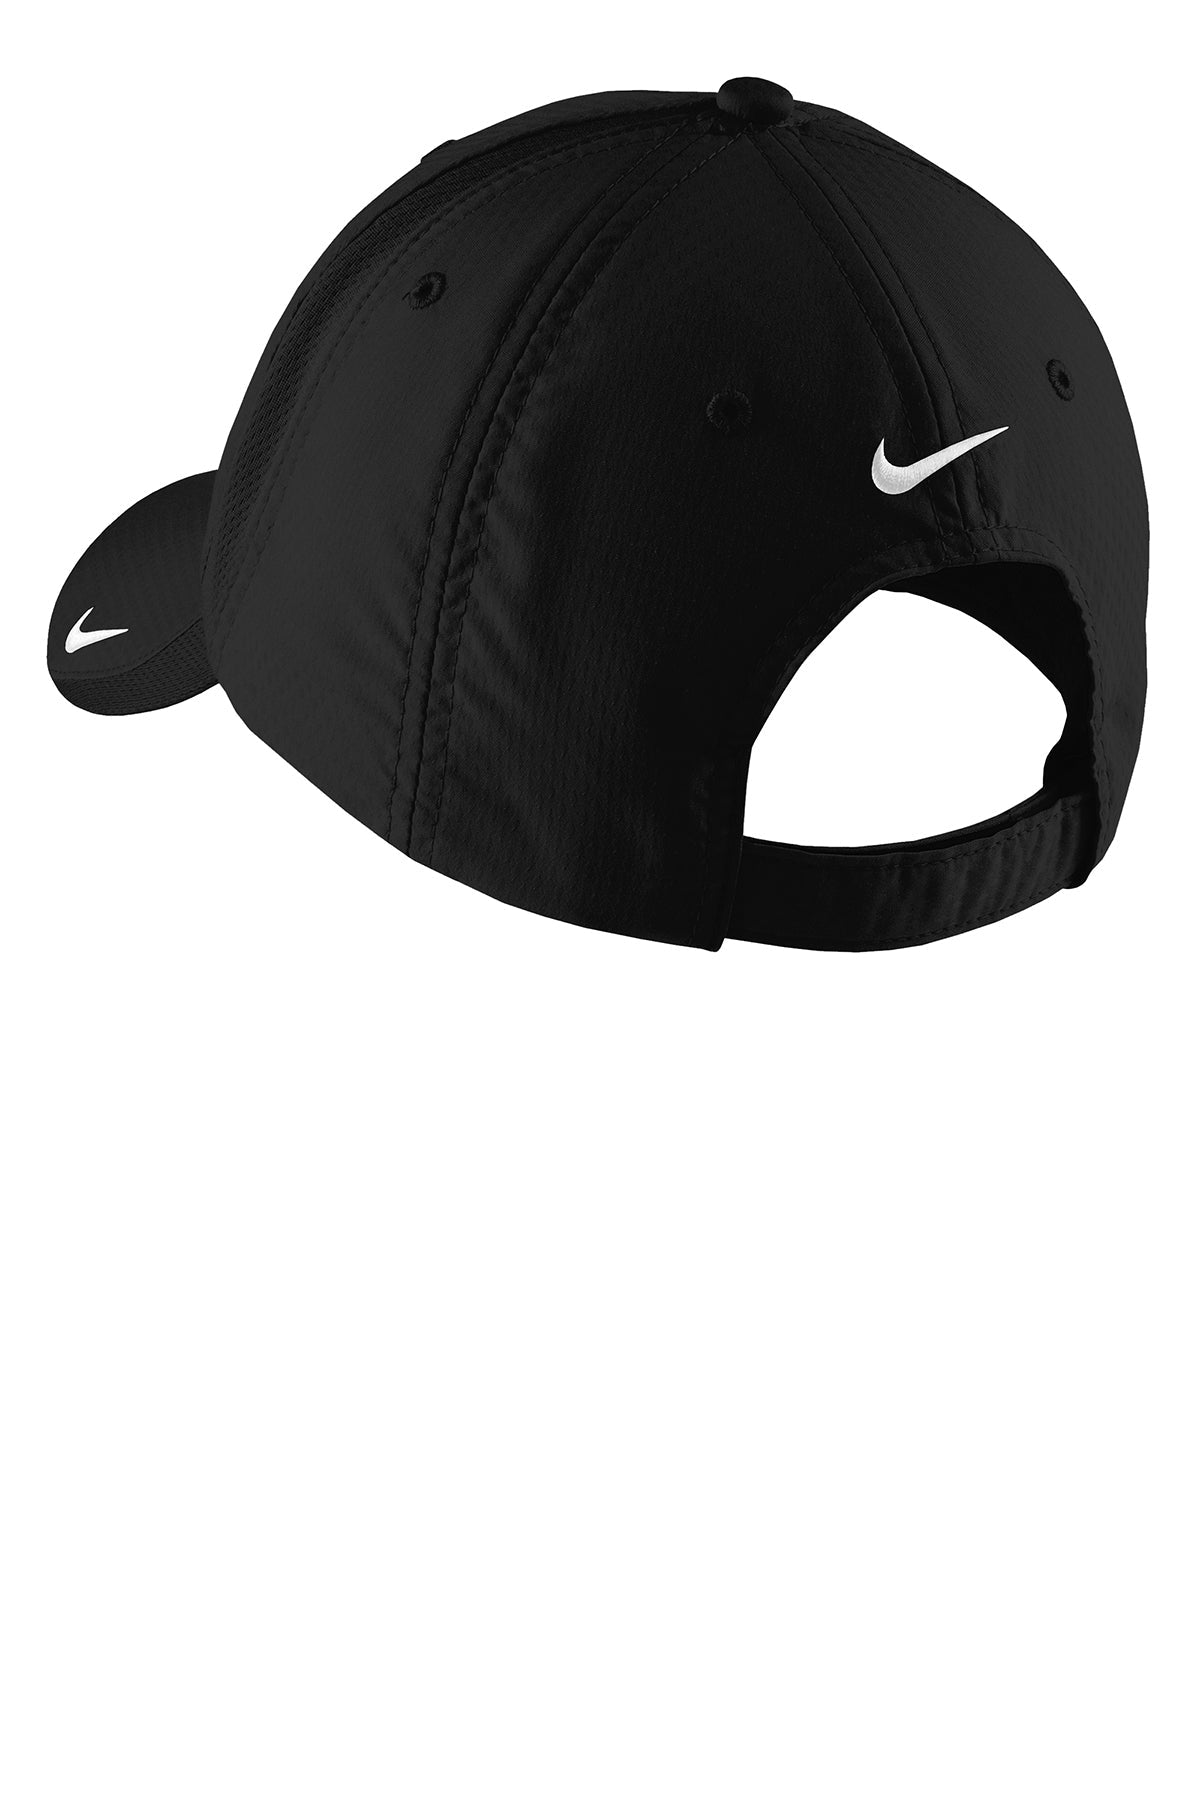 Nike Sphere Dry Custom Caps, Black